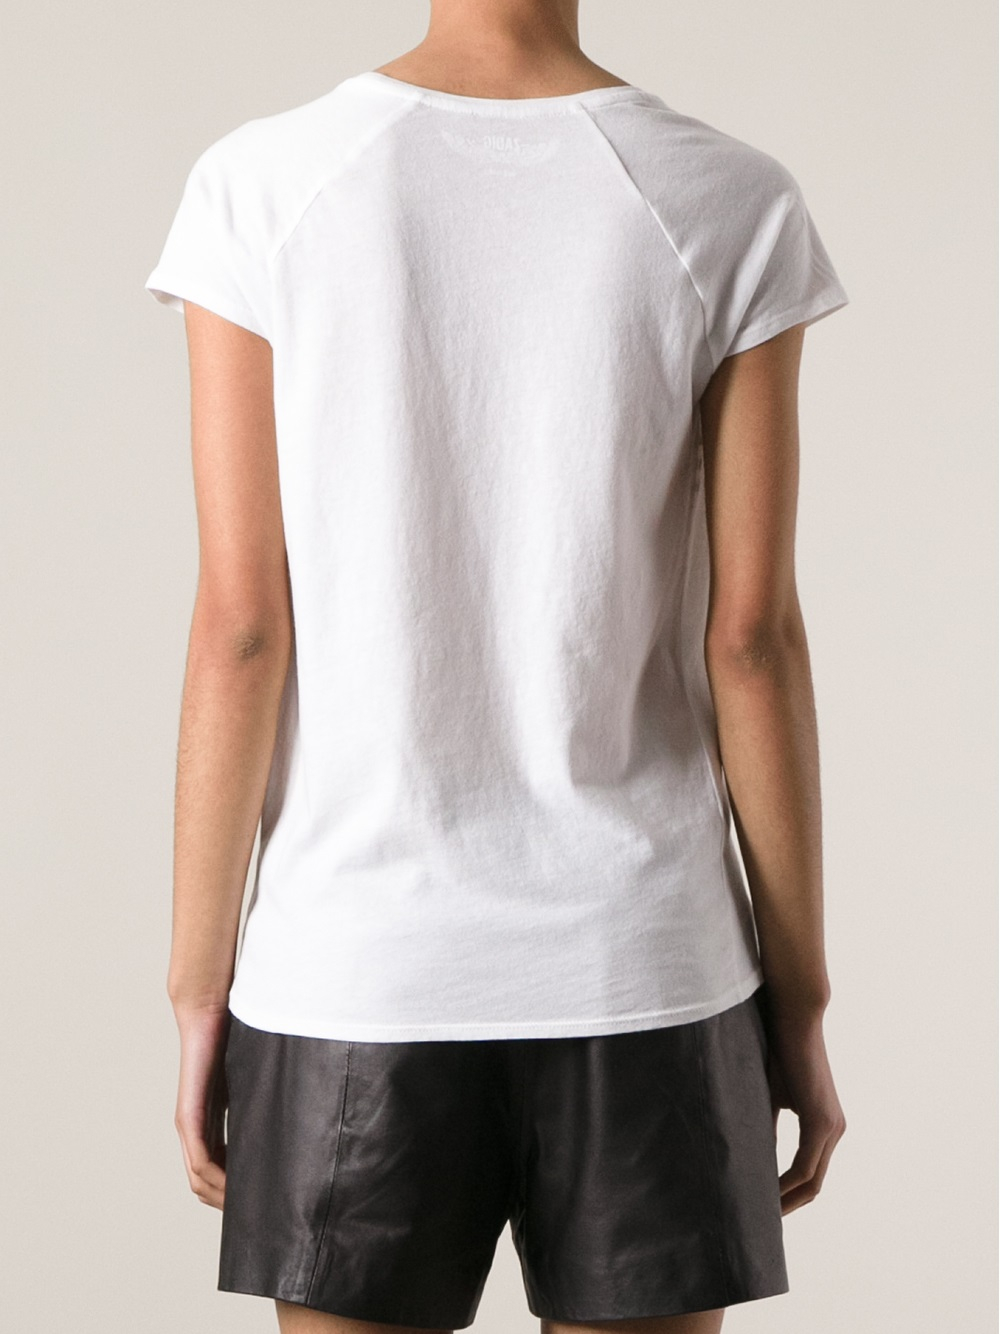 Lyst - Zadig & Voltaire Cowboy T-shirt in White